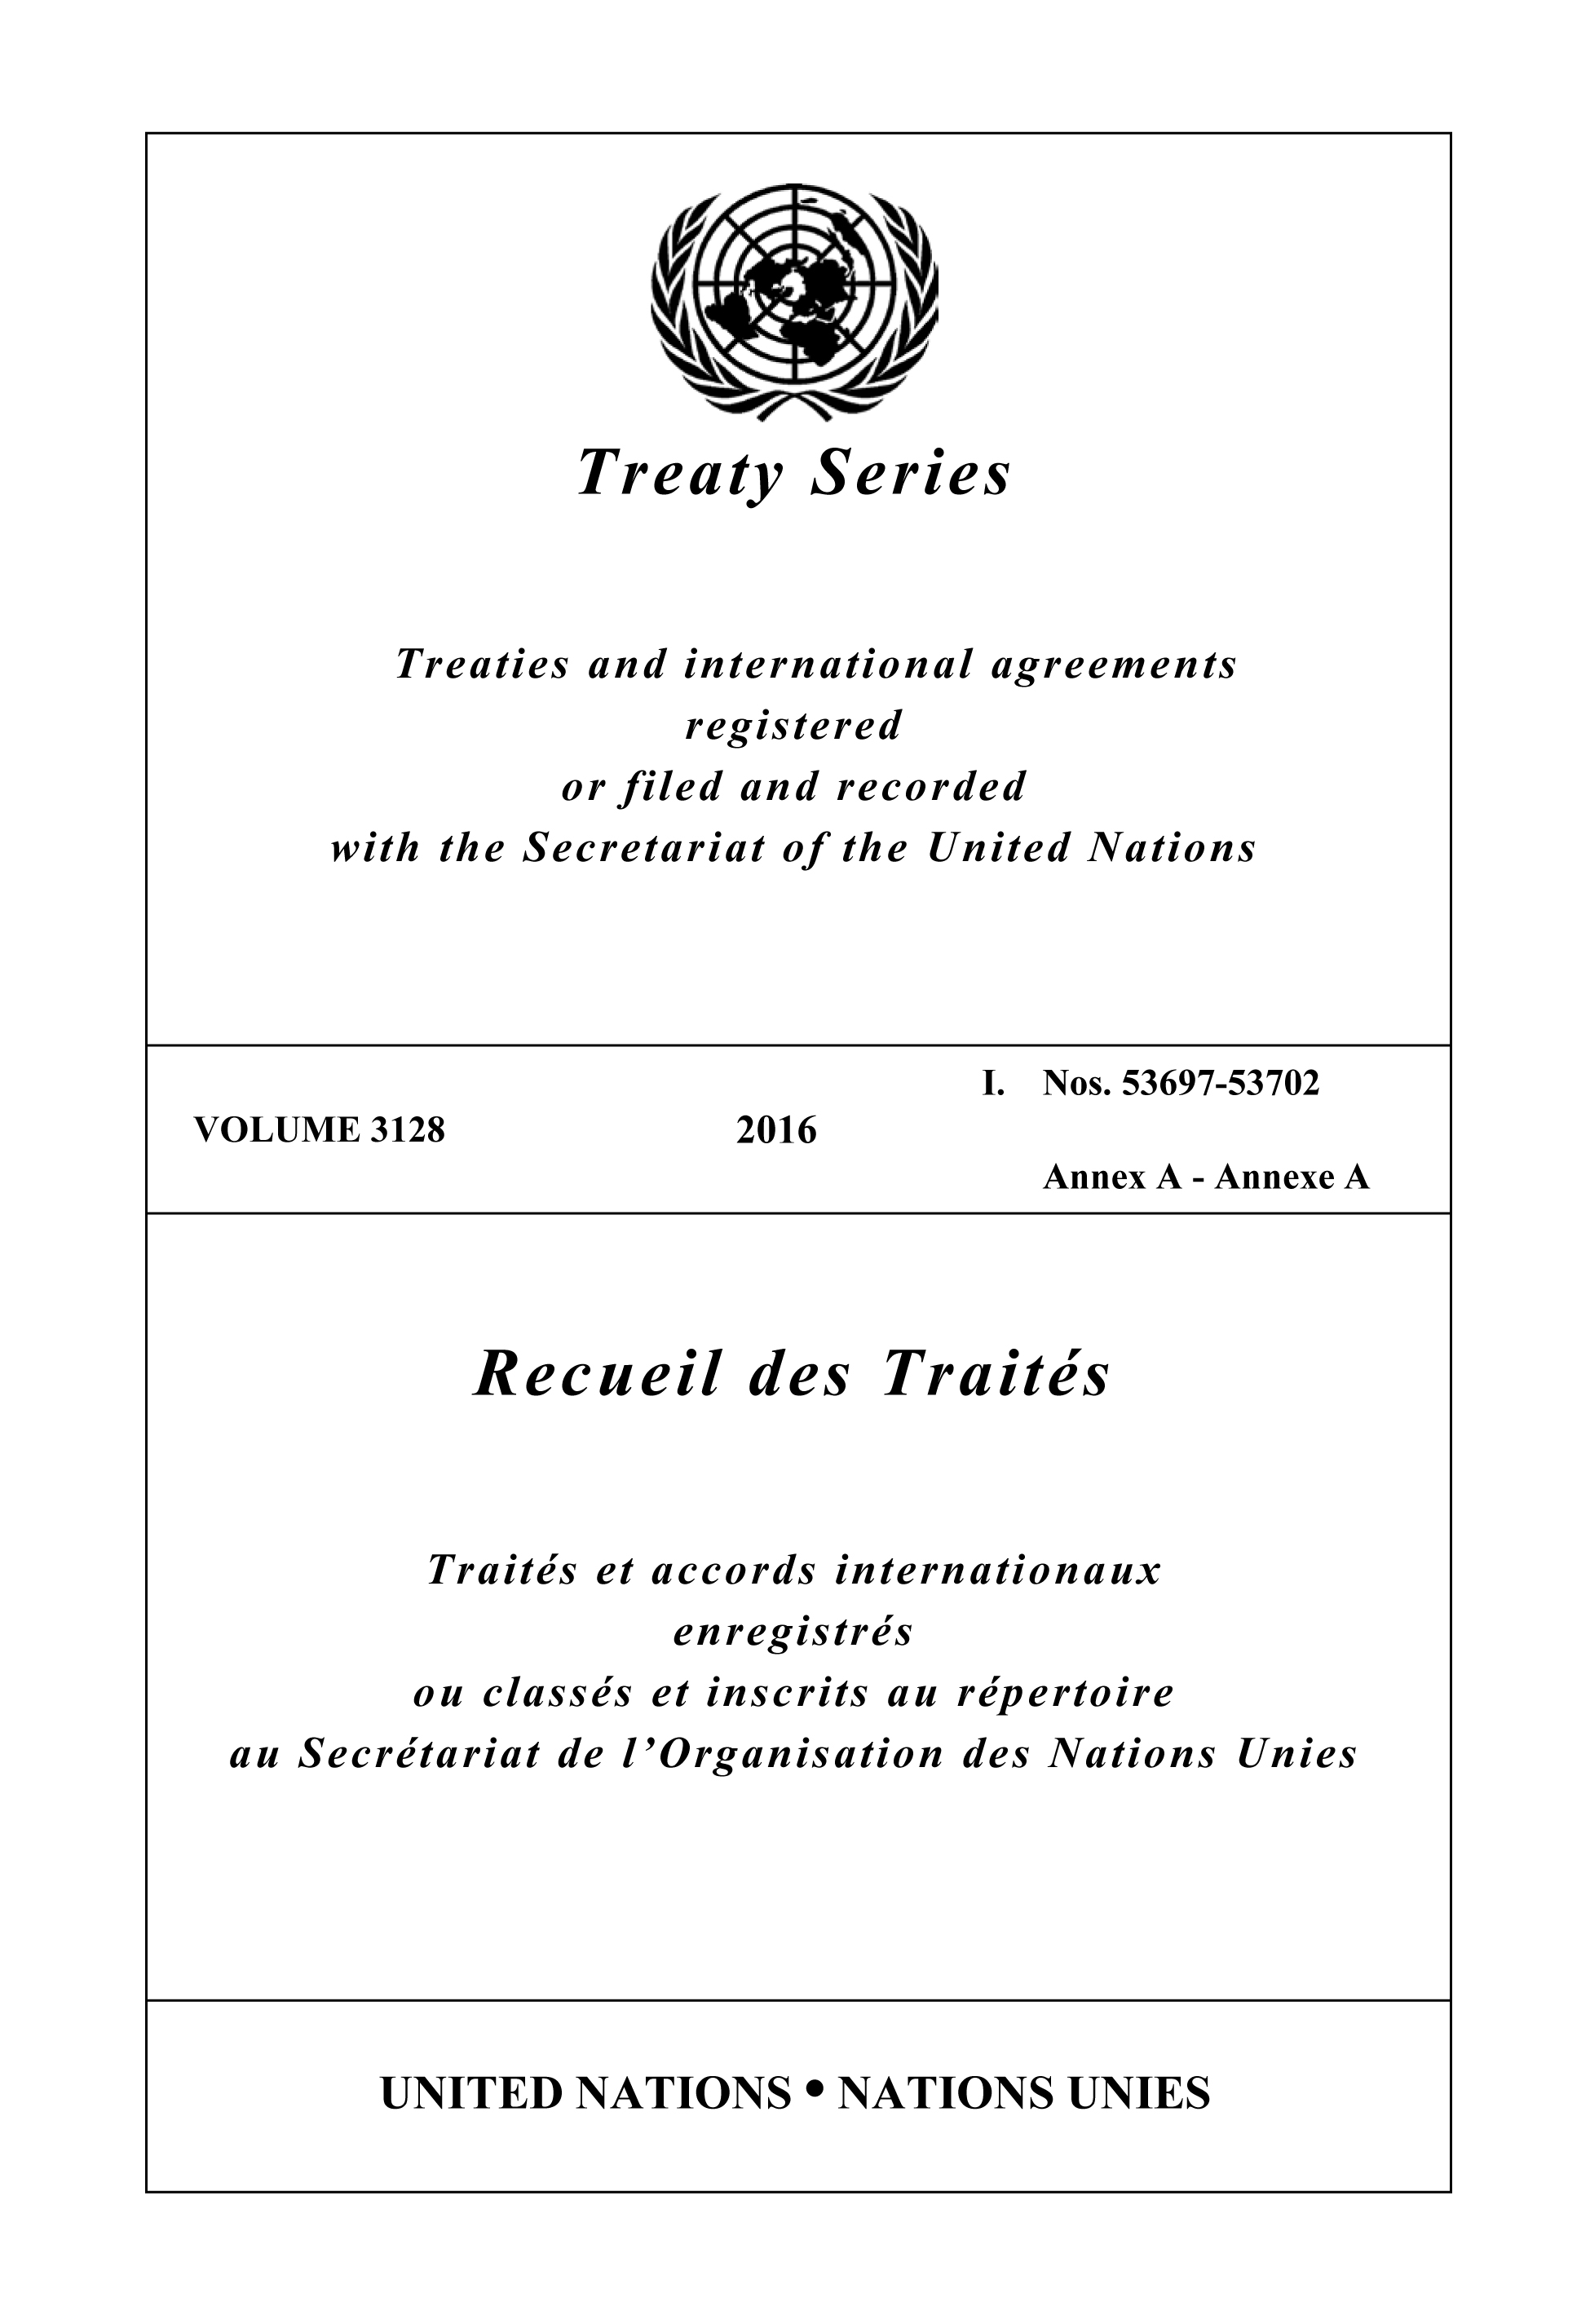 image of Treaty Series 3128